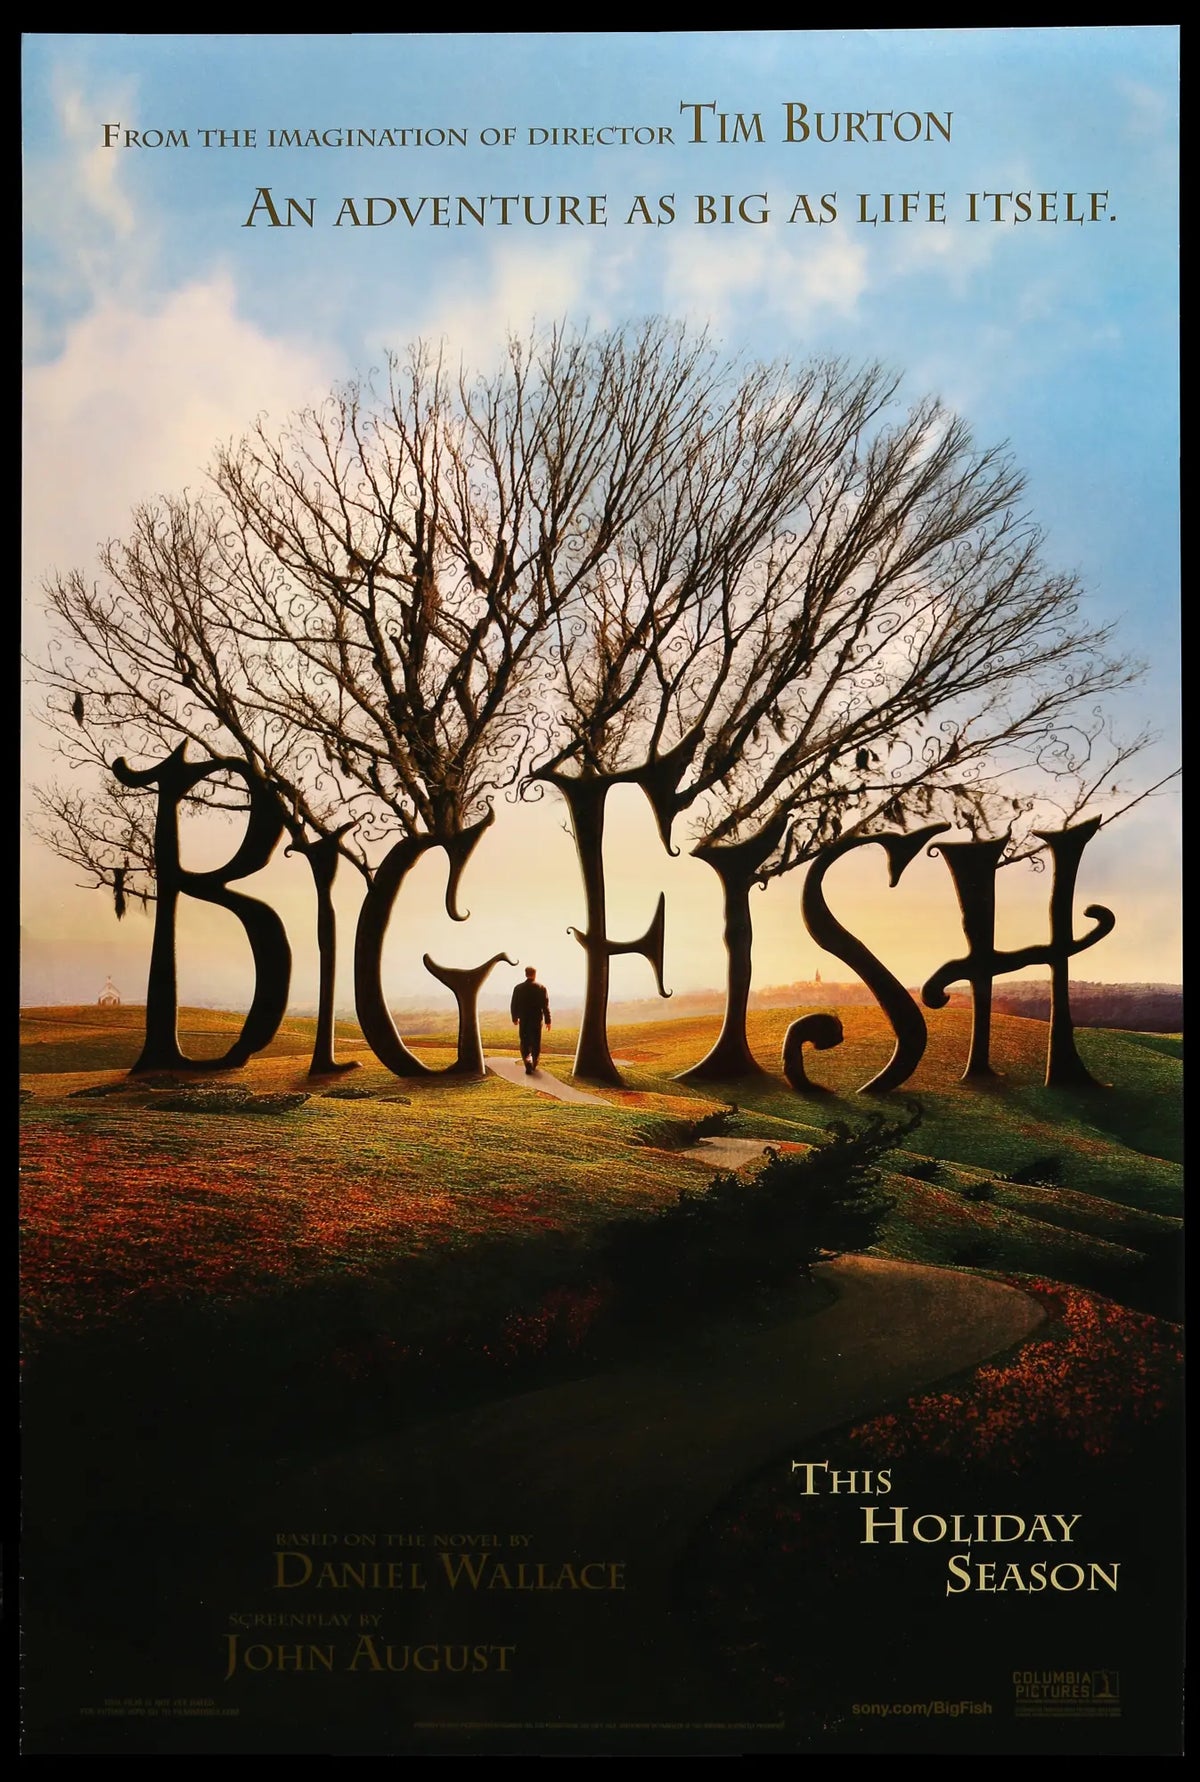 Big Fish (2003) original movie poster for sale at Original Film Art